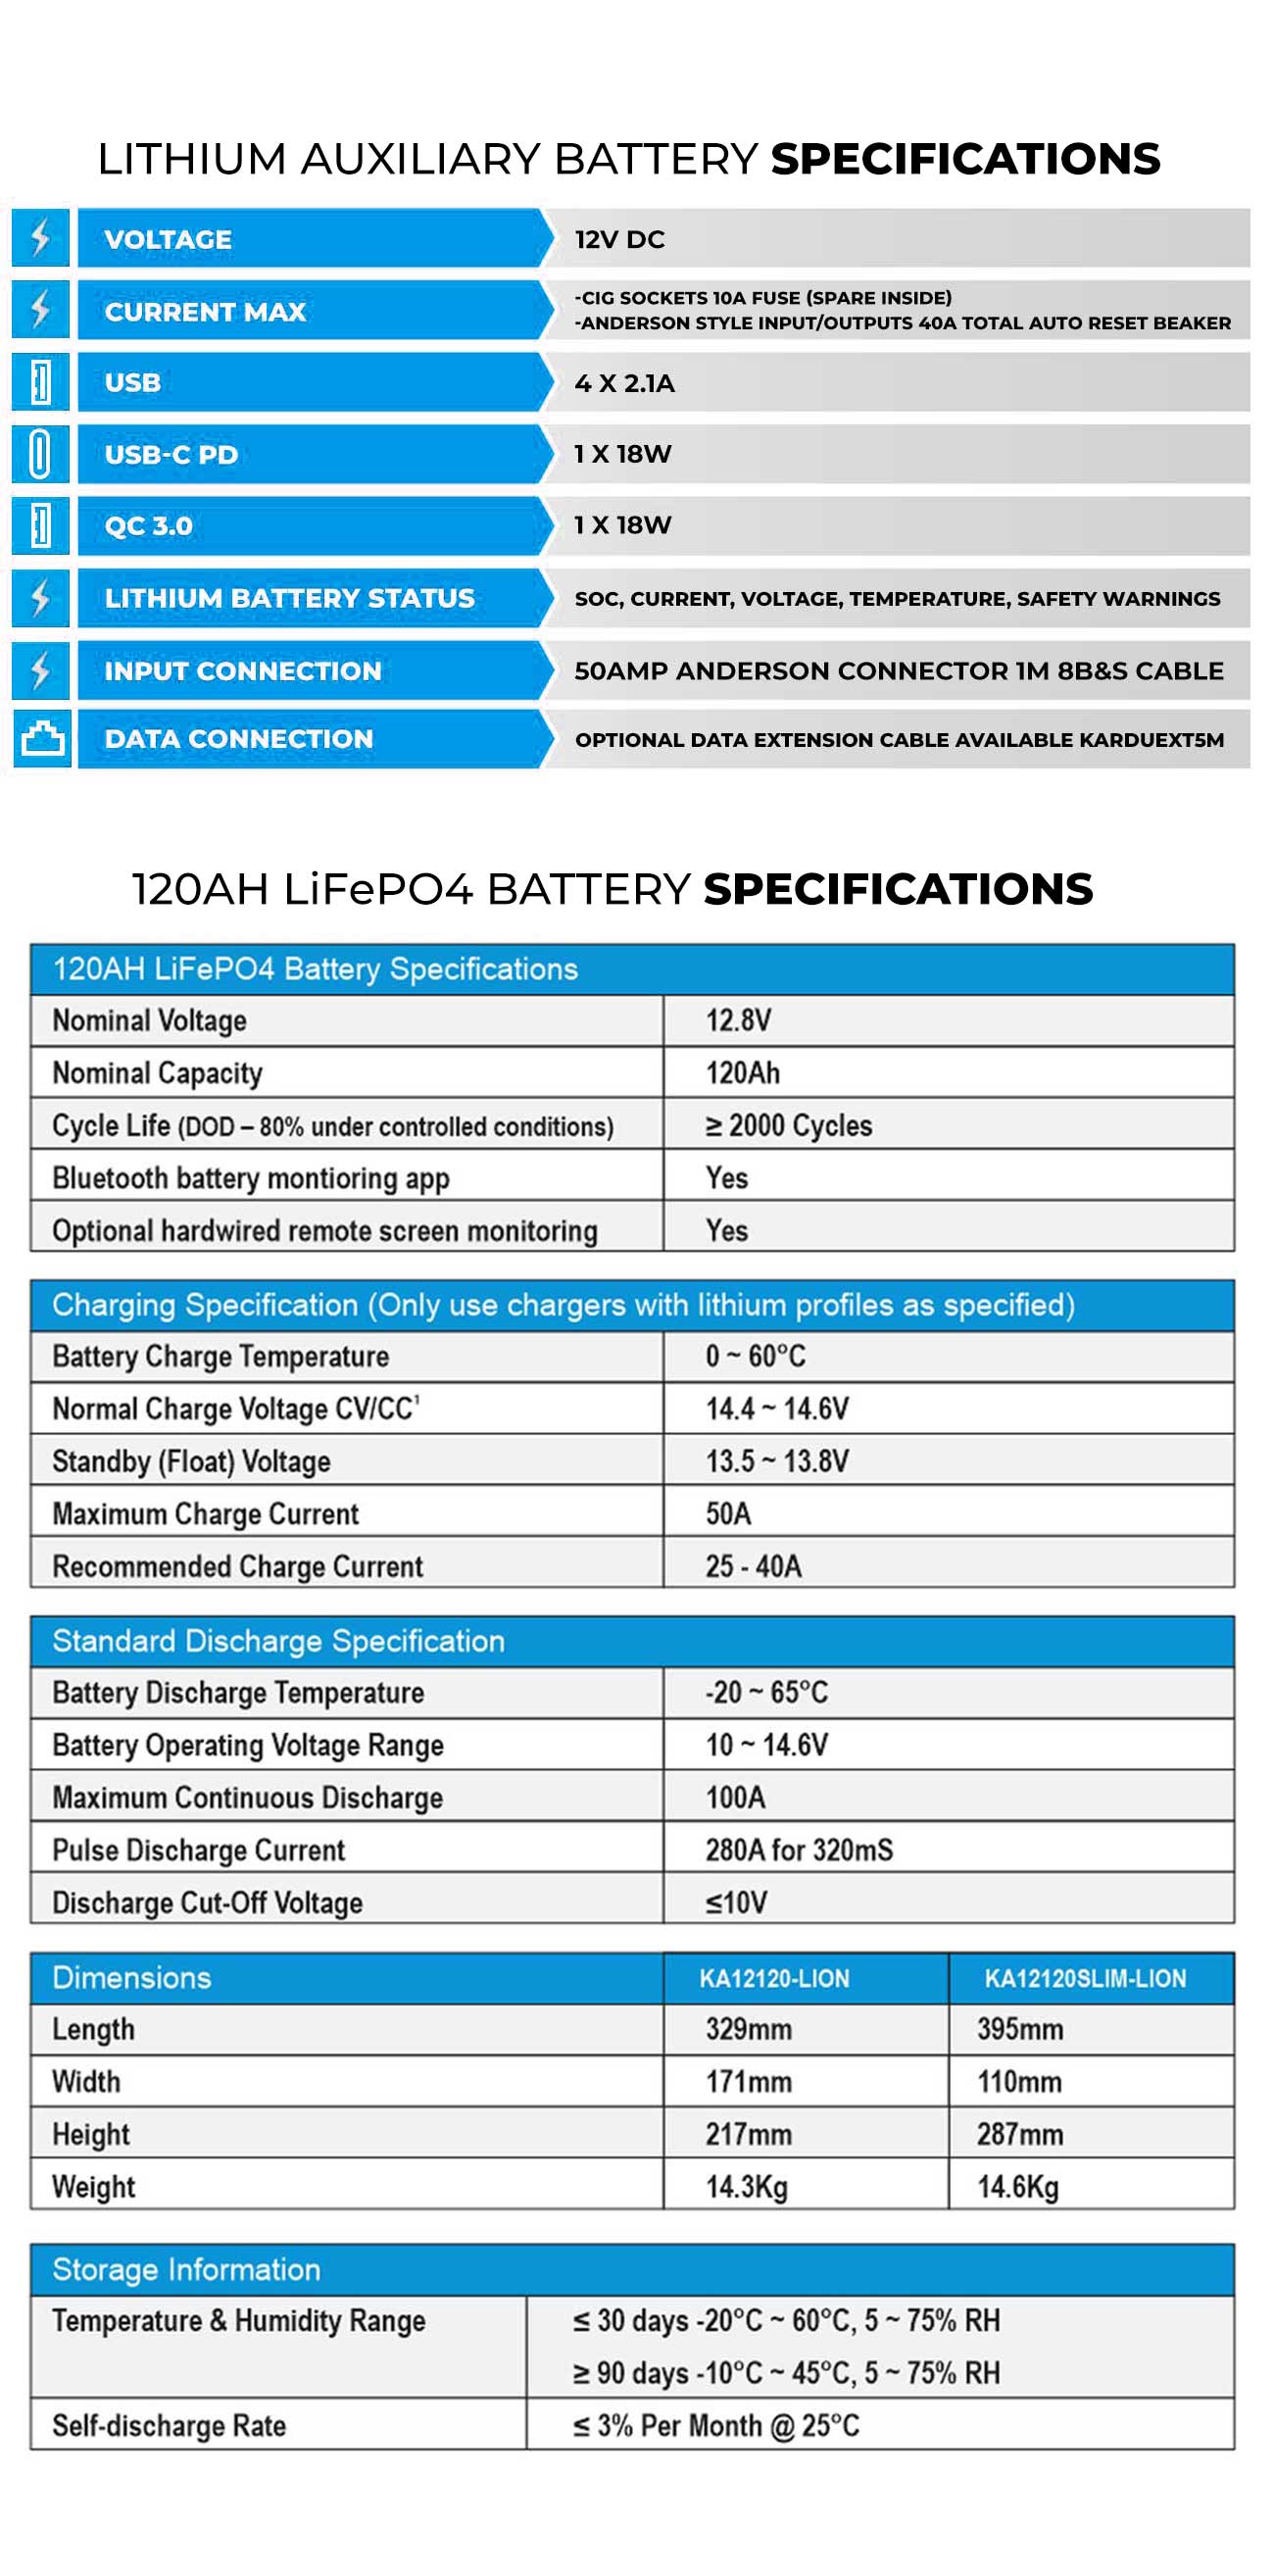 KickAss 12V 120Ah Slimline LiFePO4 Lithium Battery Essentials Bundle